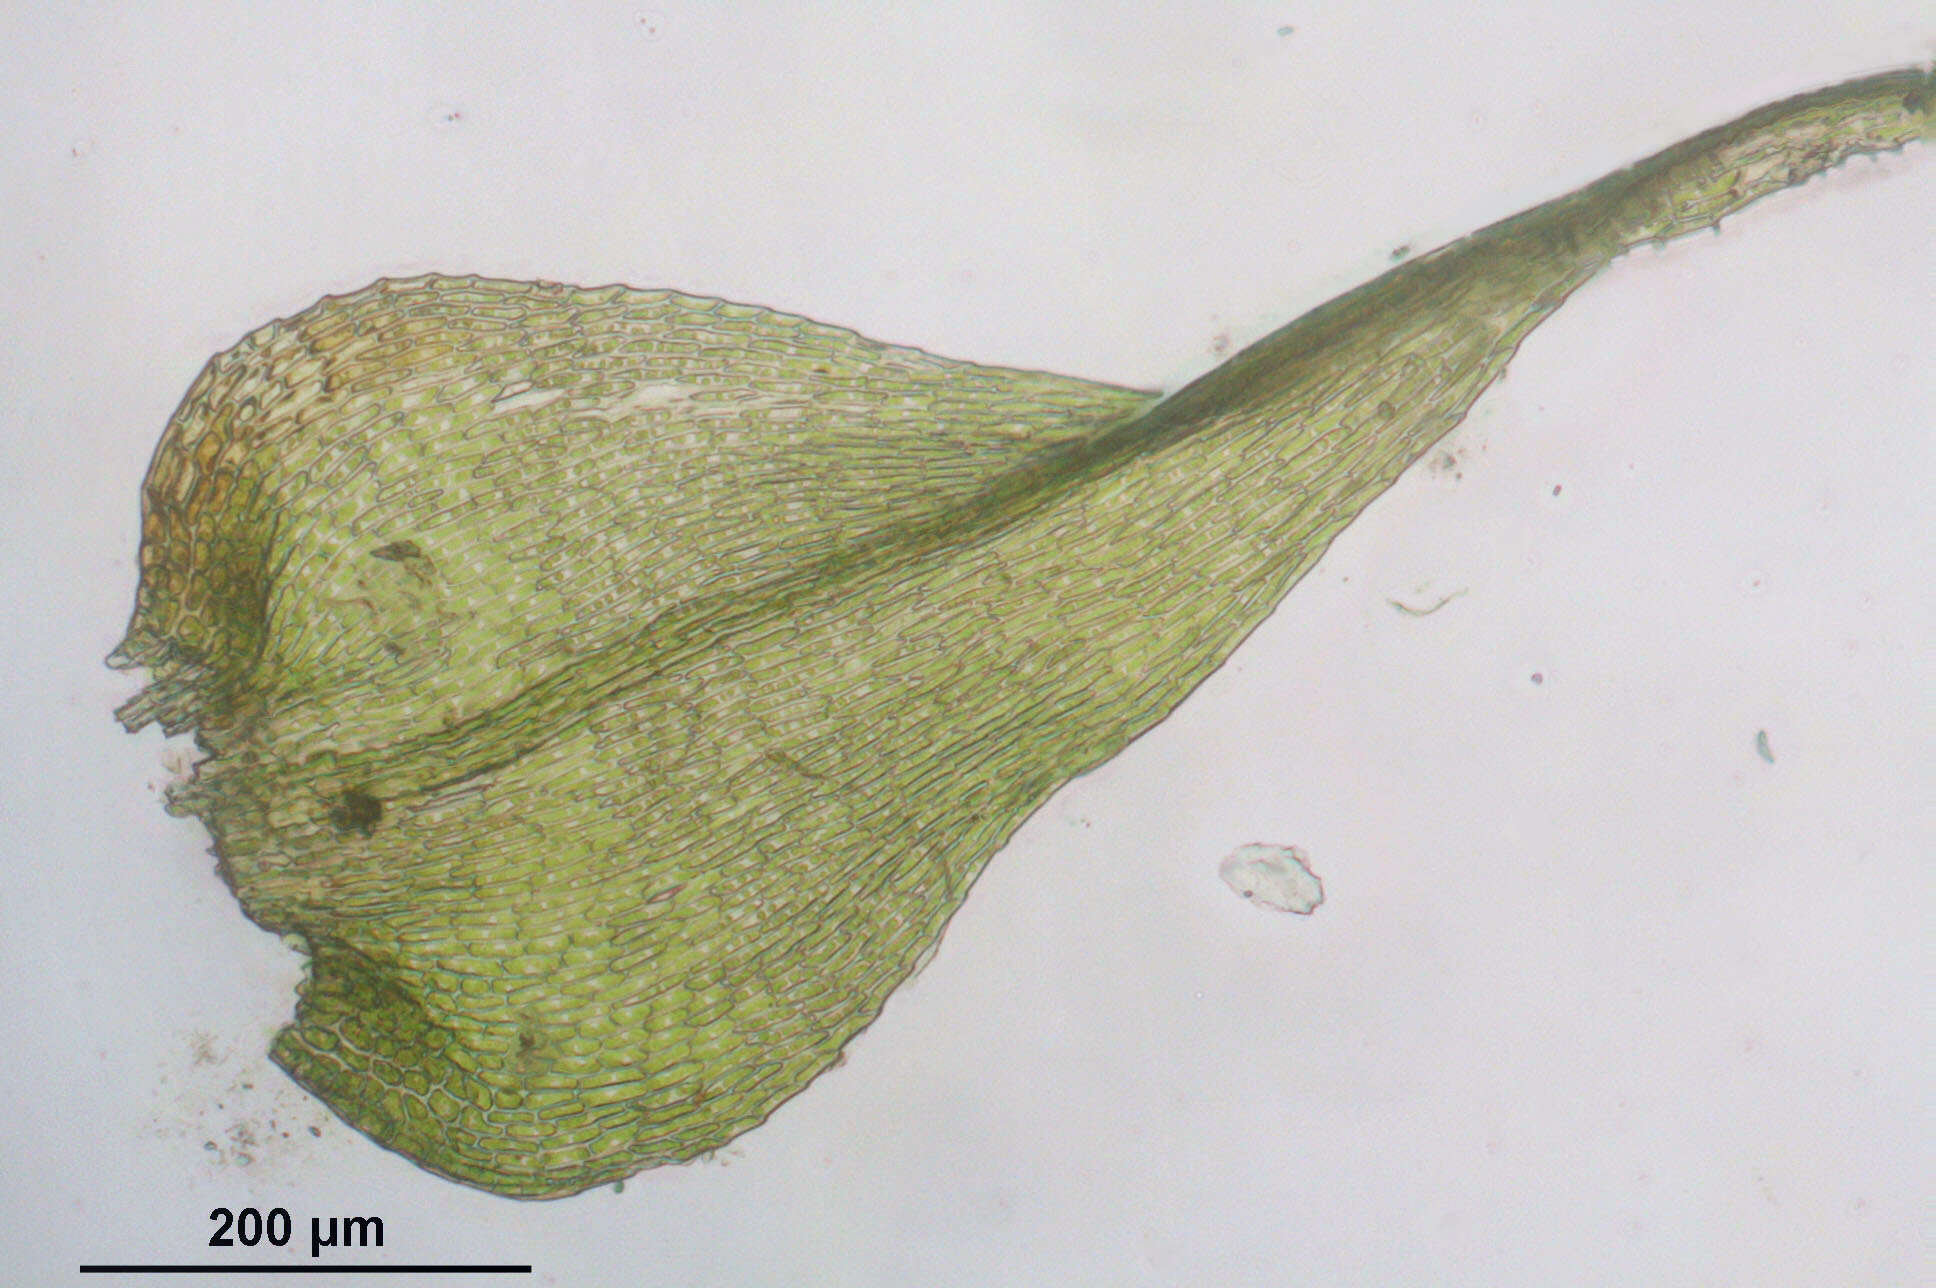 Image of goldenleaf campylium moss